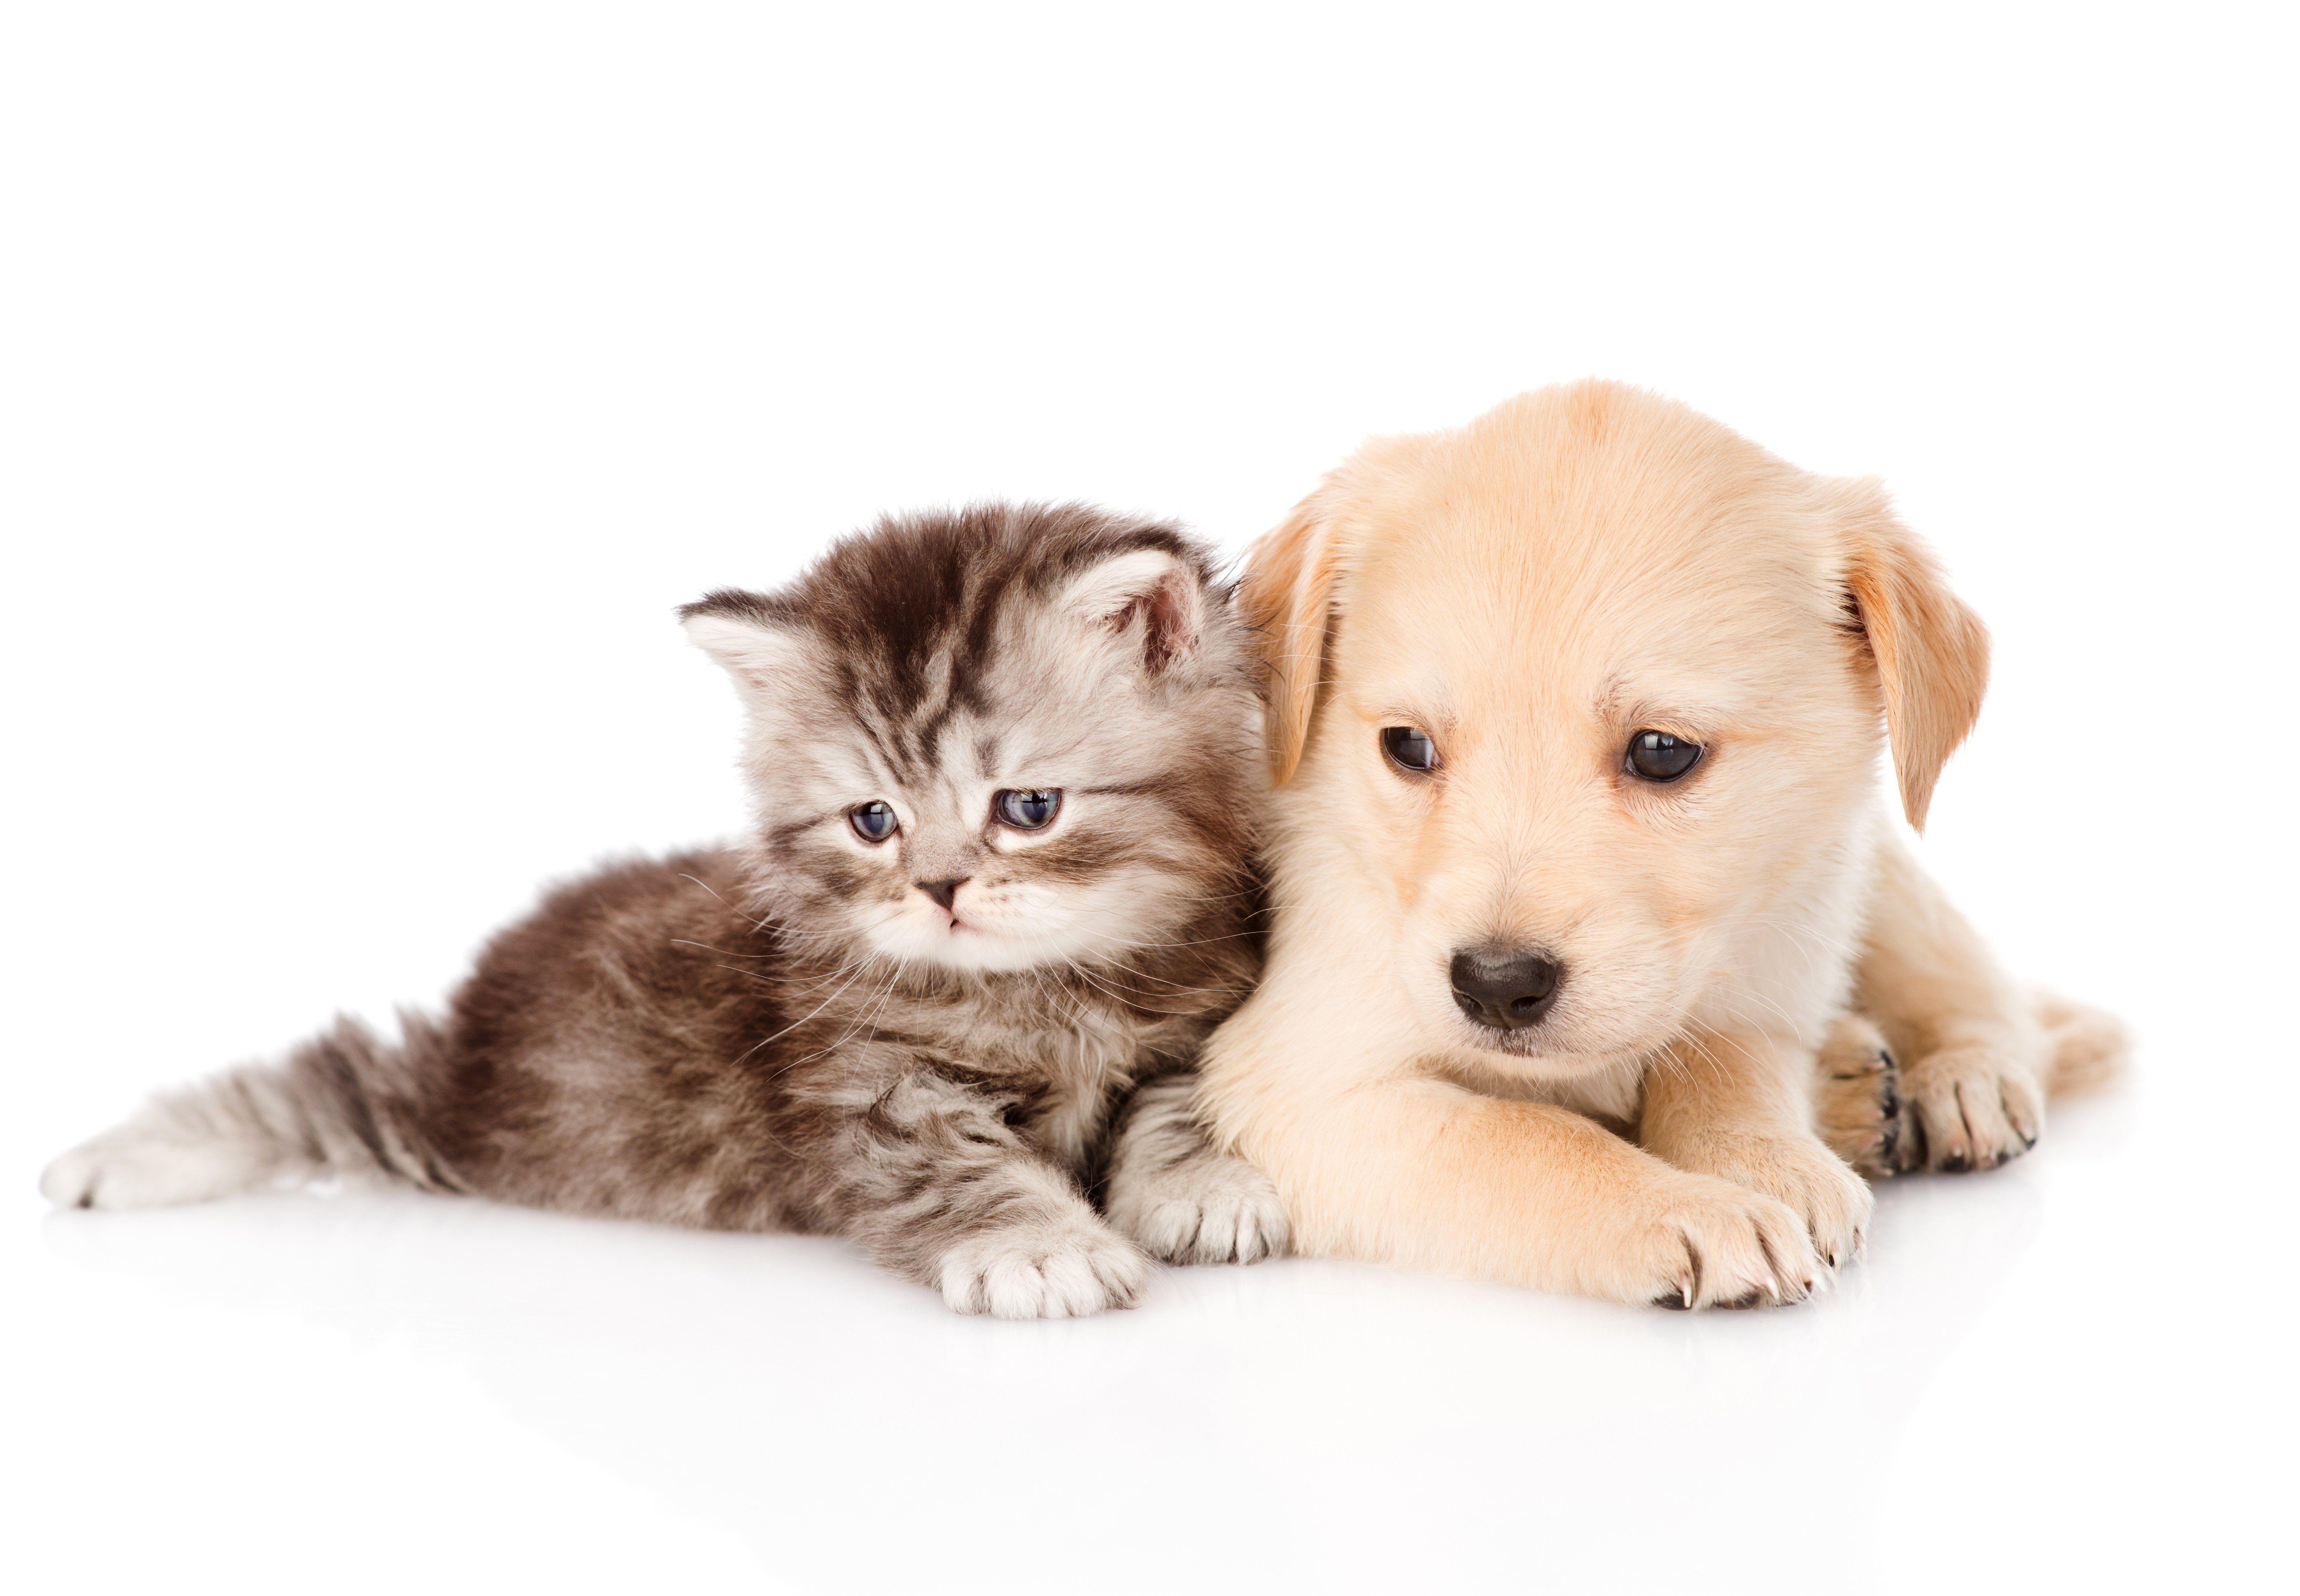 Cat And Dog Desktop Wallpapers Top Free Cat And Dog Desktop Backgrounds WallpaperAccess